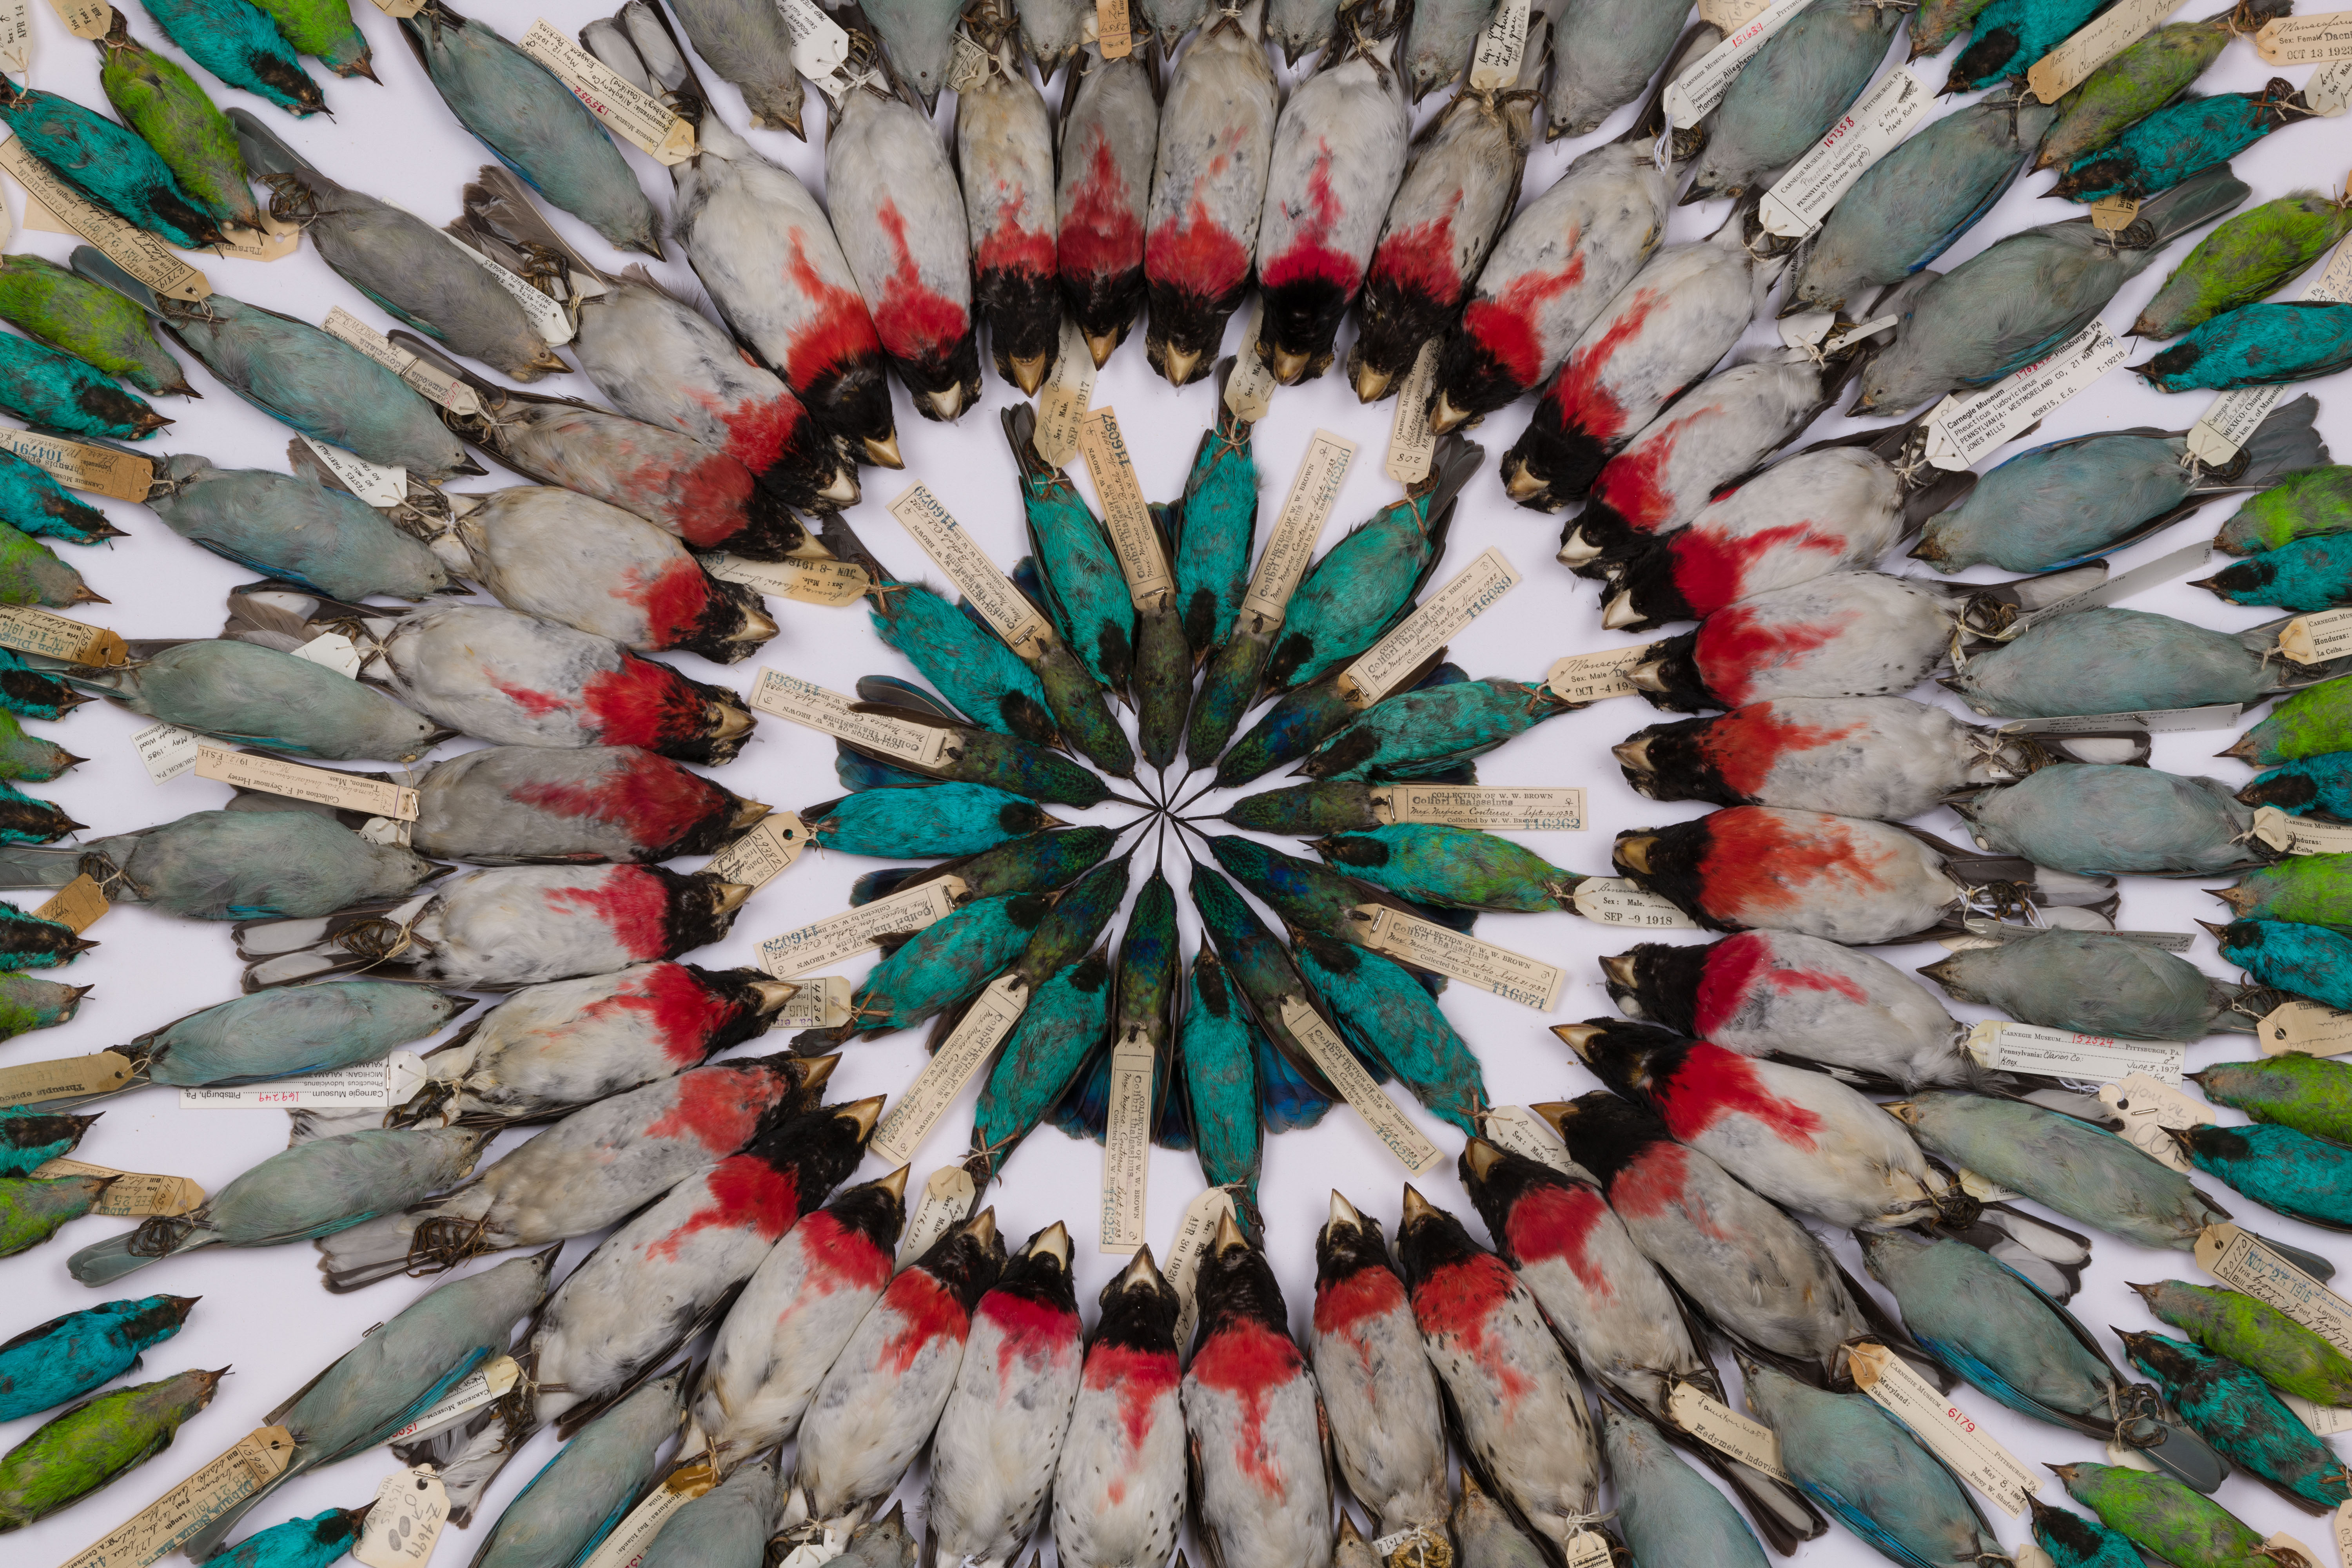 A mandala made of birds